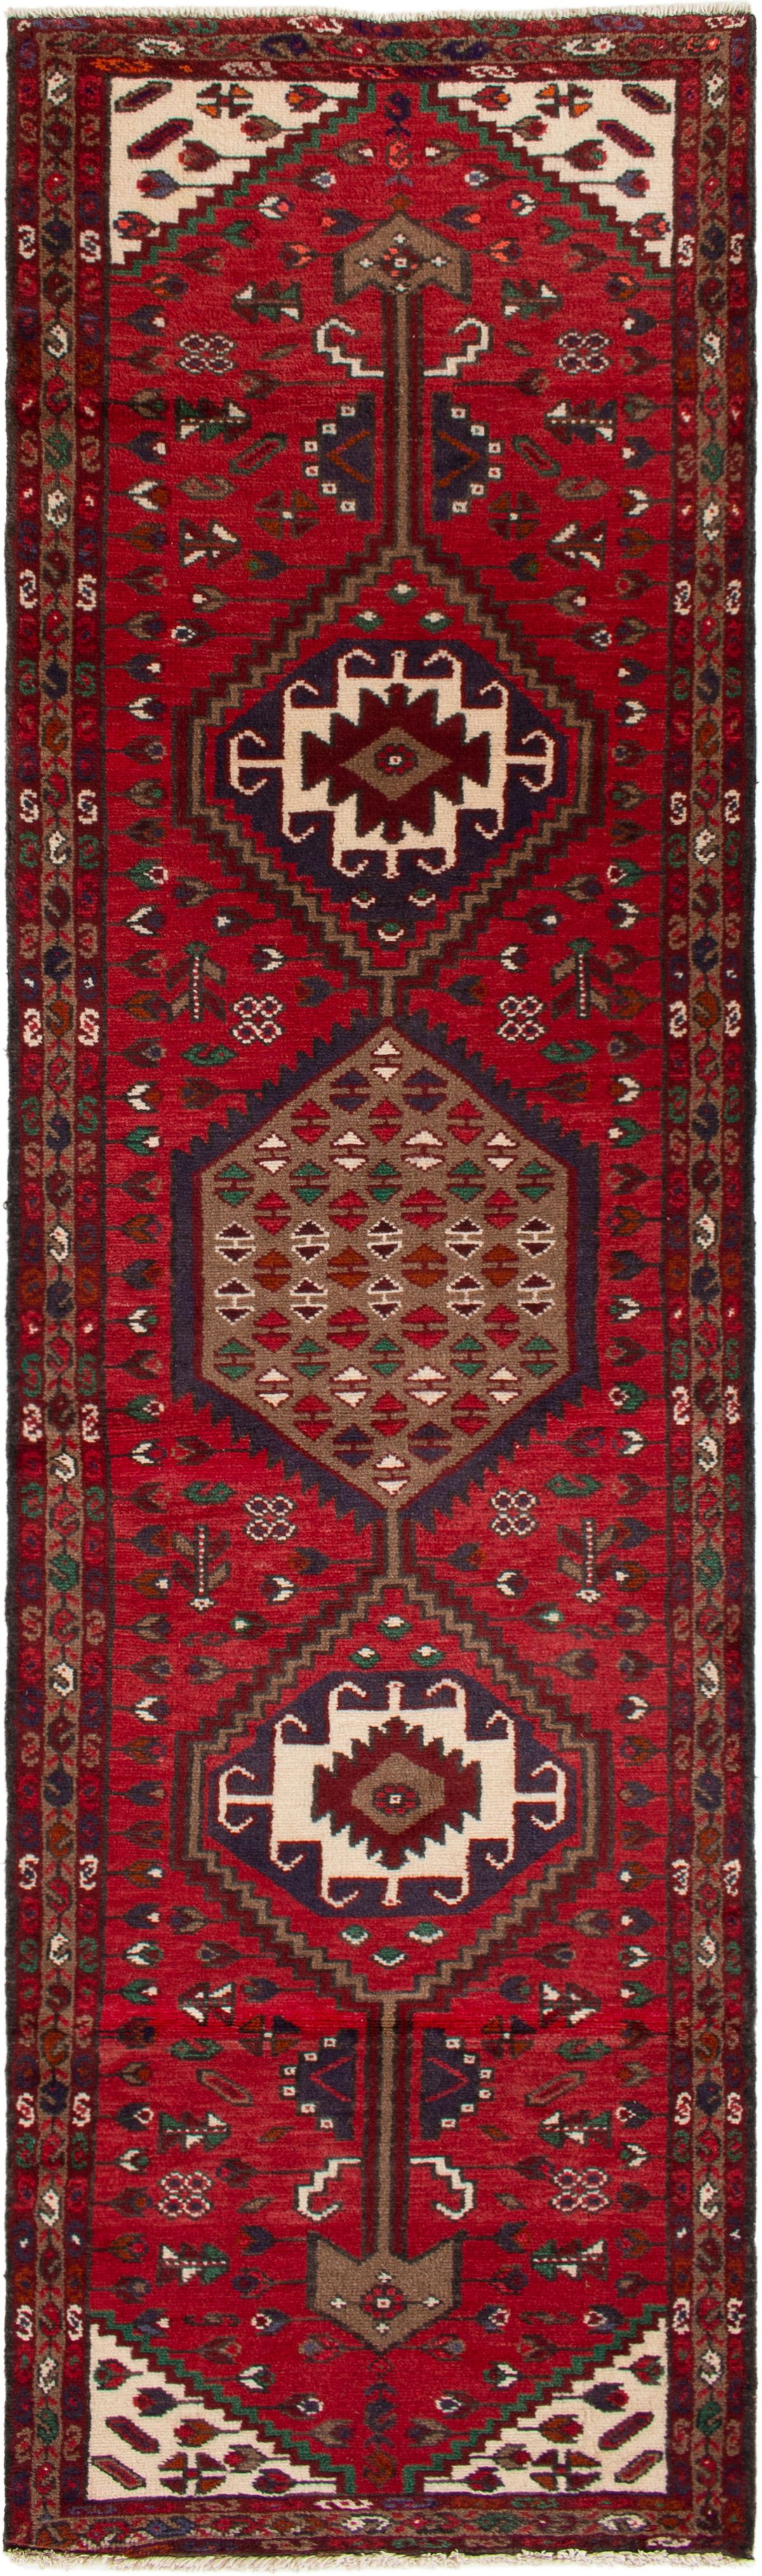 Hand-knotted Hamadan  Wool Rug 2'6" x 9'7" Size: 2'6" x 9'7"  